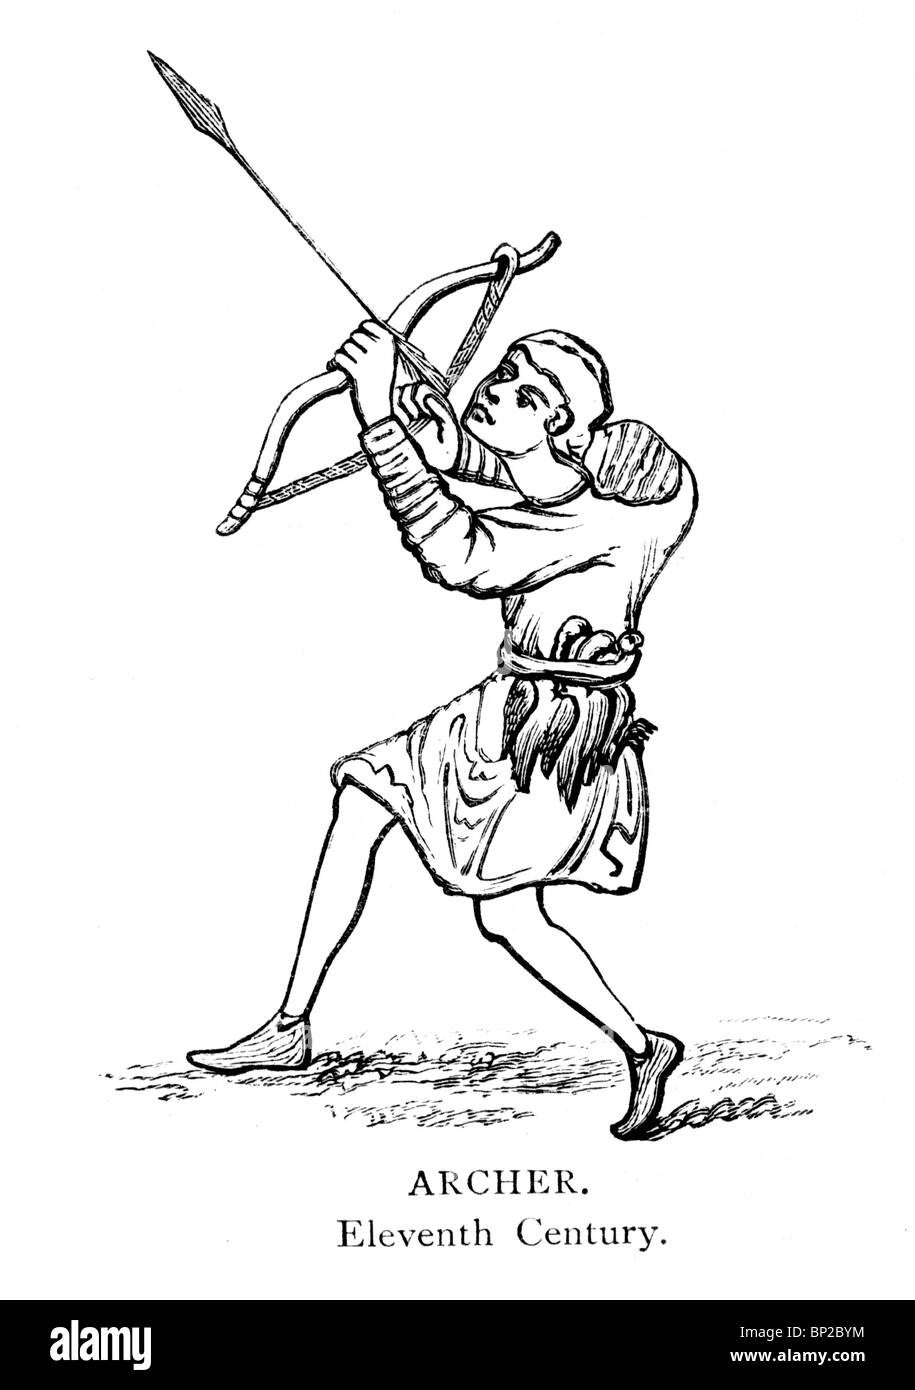 Black and White Illustration; 11th century Archer Stock Photo